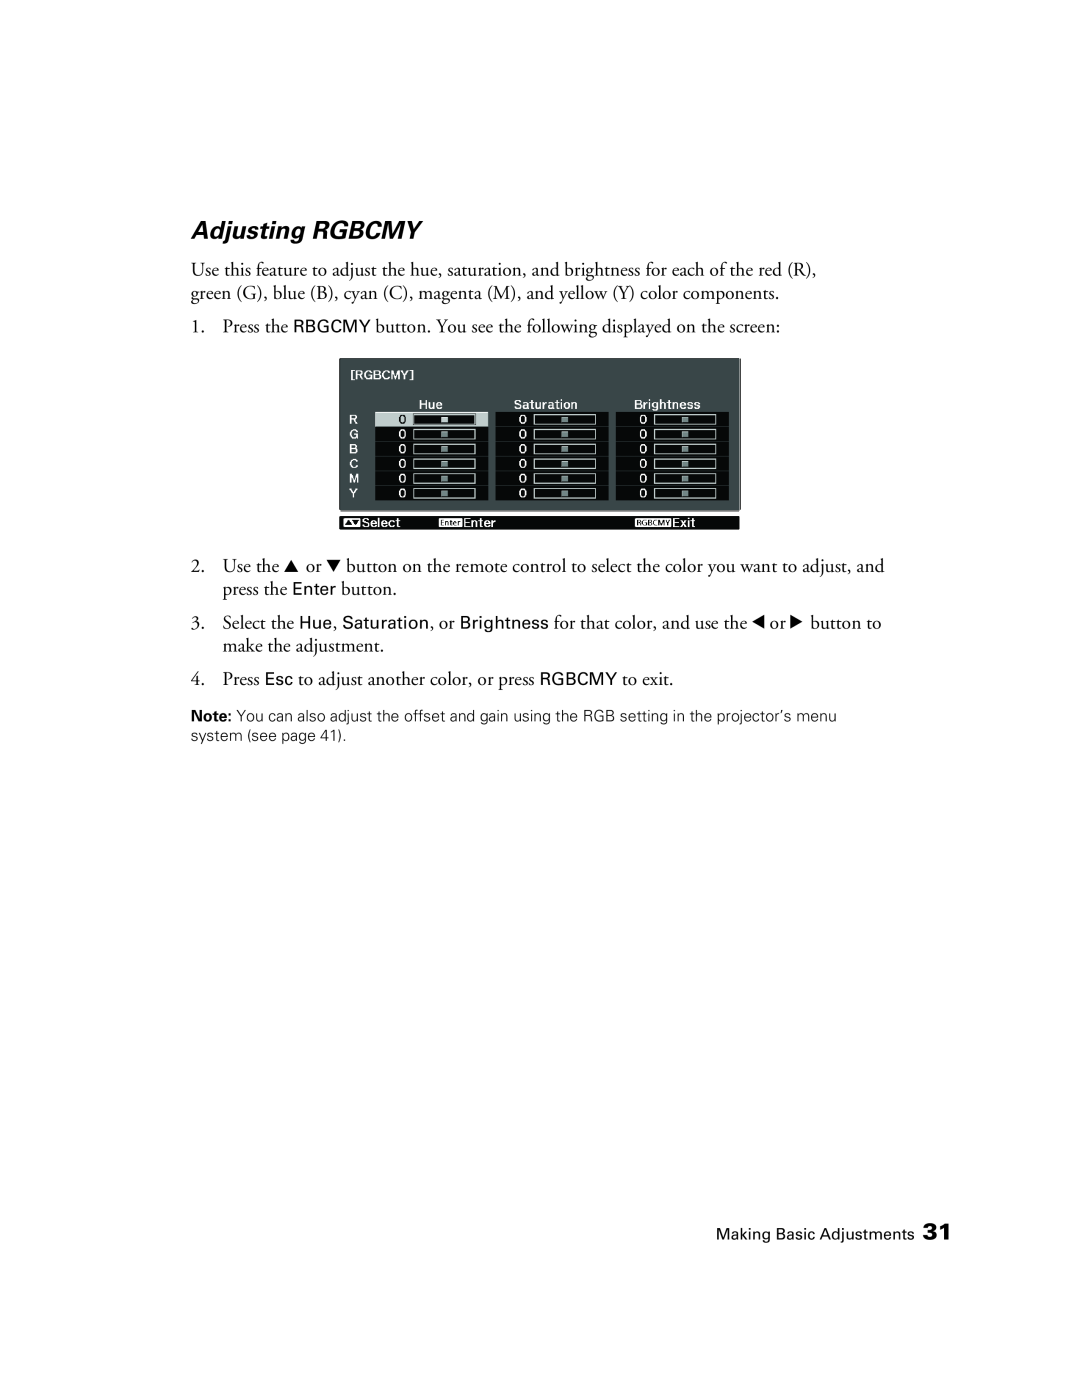 Epson 9700, 9350 manual Adjusting RGBCMY, Making Basic Adjustments 